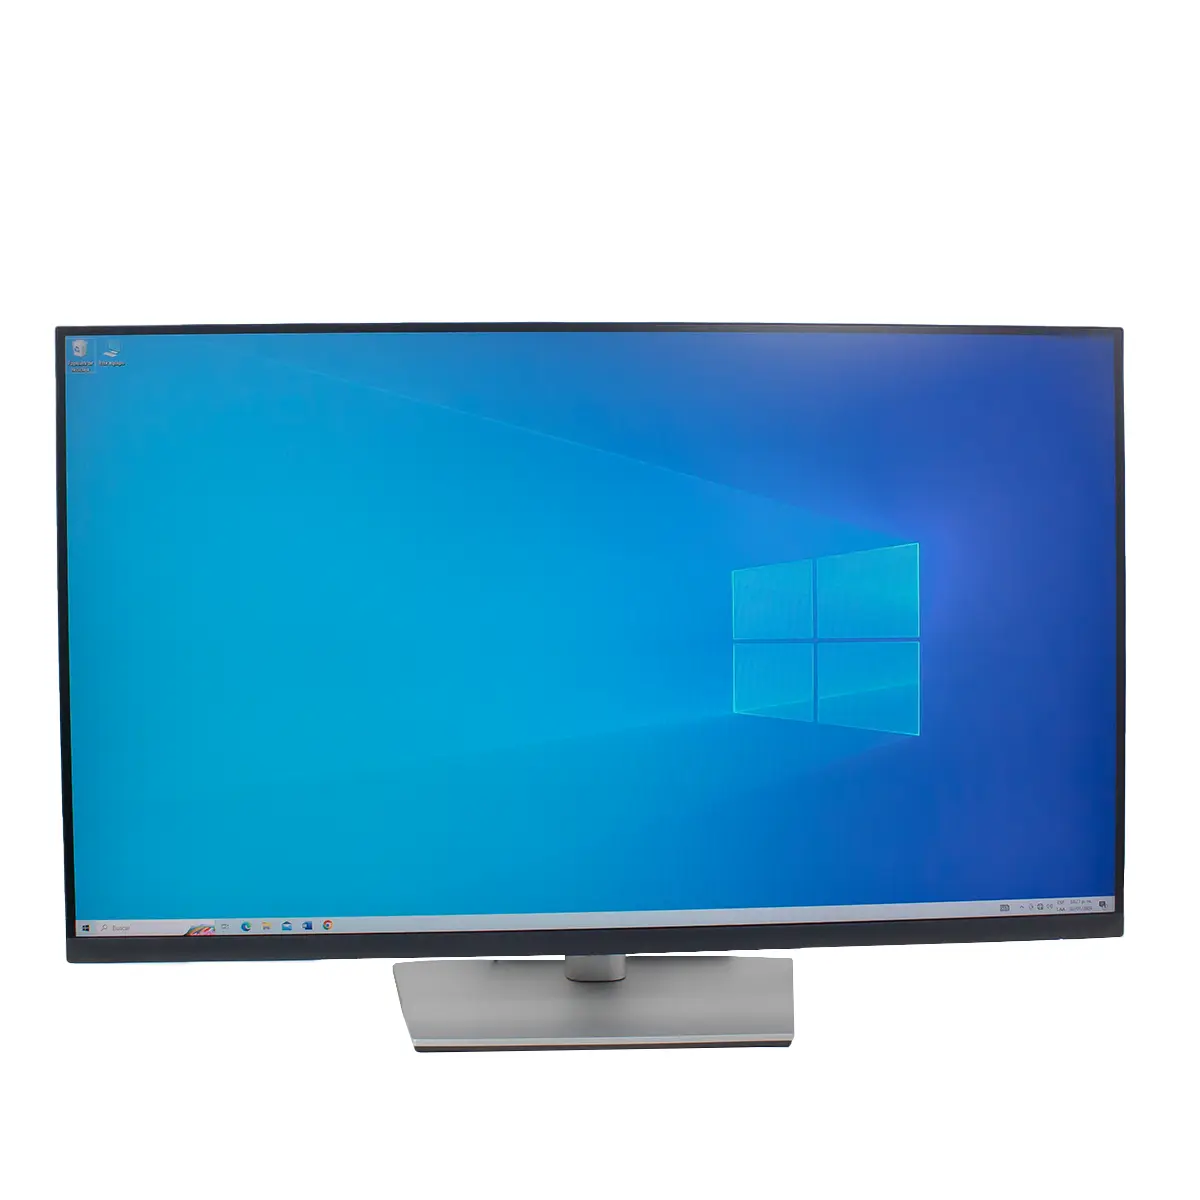 Monitor Dell 19 - PC ONE TIJUANA